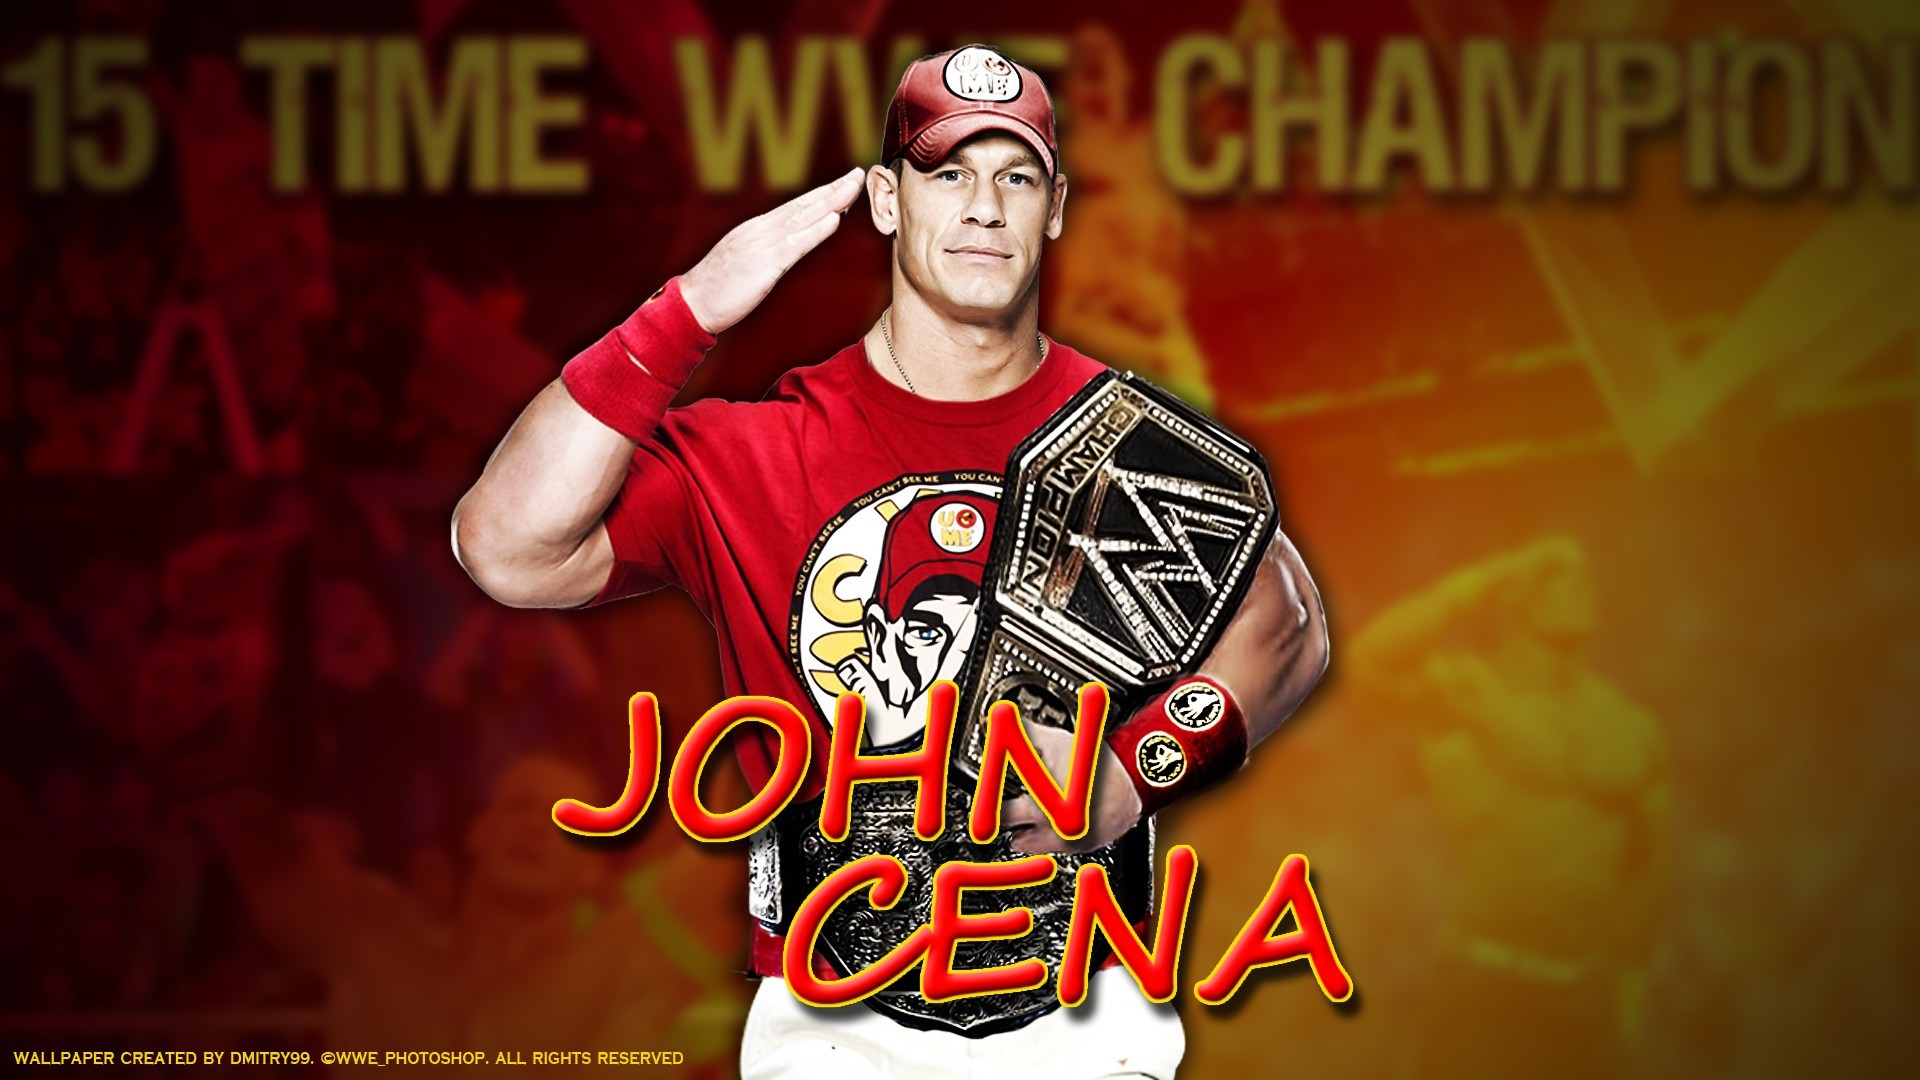 1920x1080 John Cena Wallpapers New Wwe John Cena Wallpaper 2018 Hd 53 Images